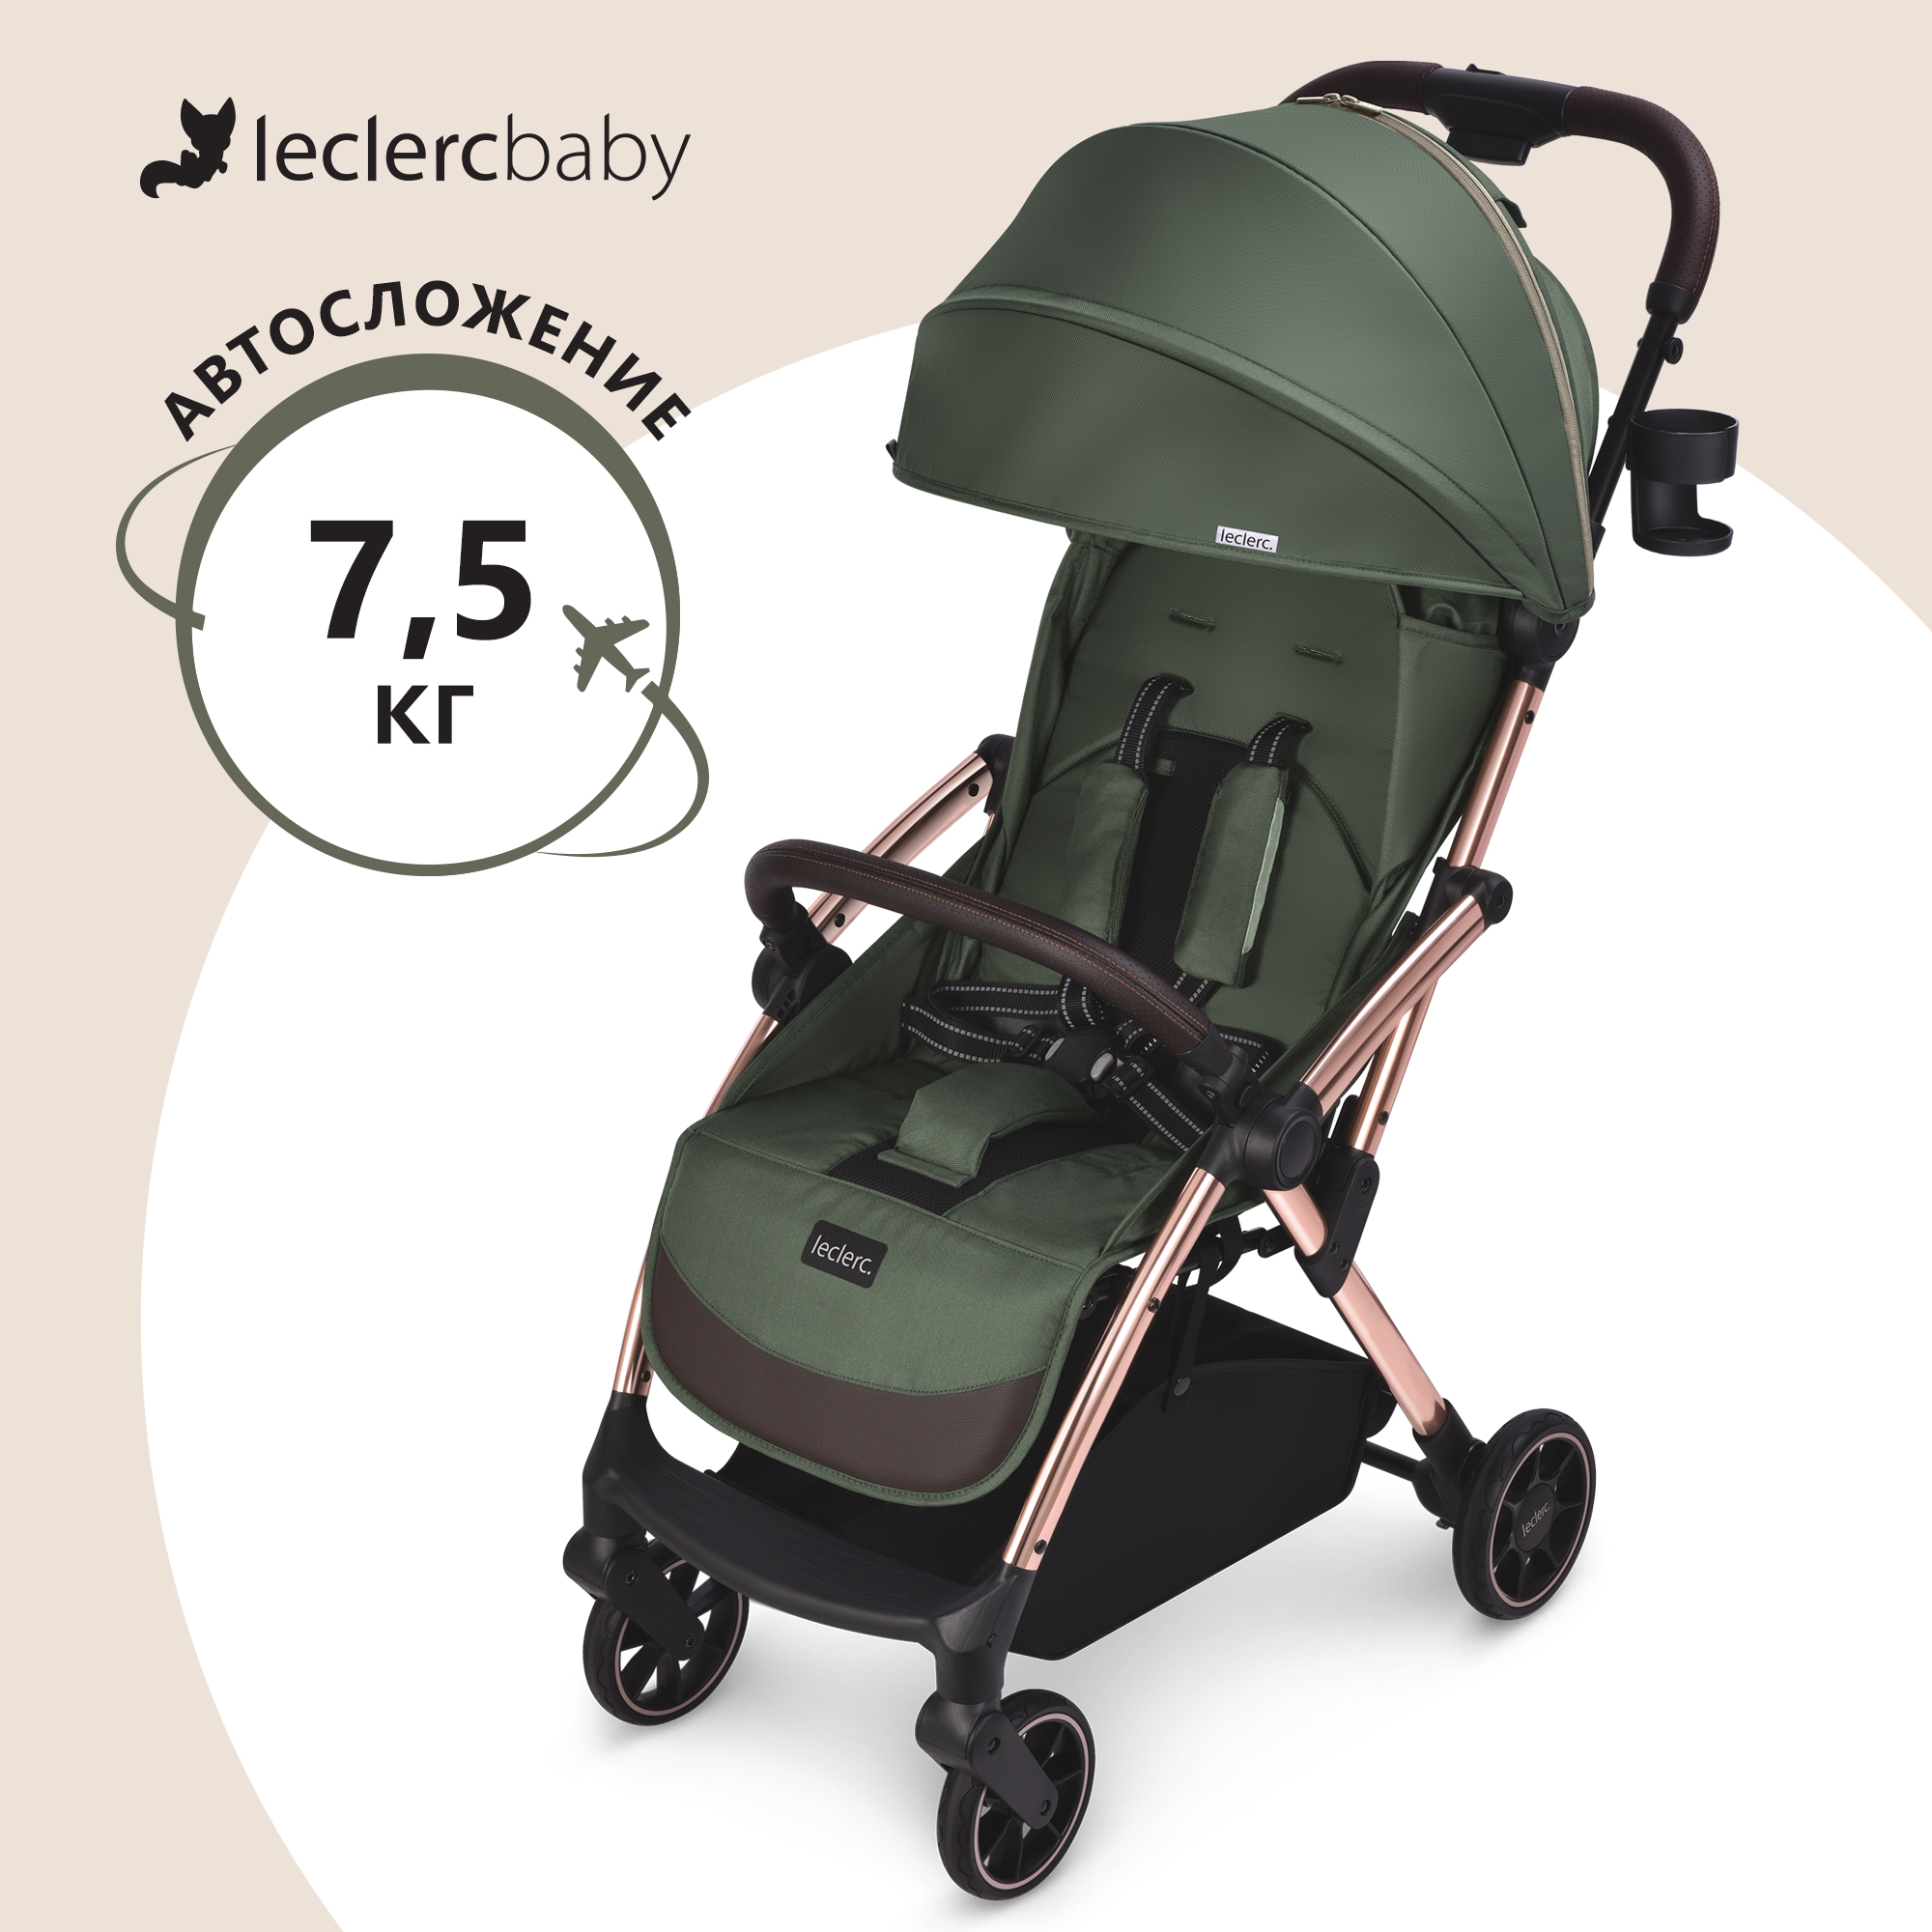 Прогулочная коляска Leclerc baby Influencer Army Green